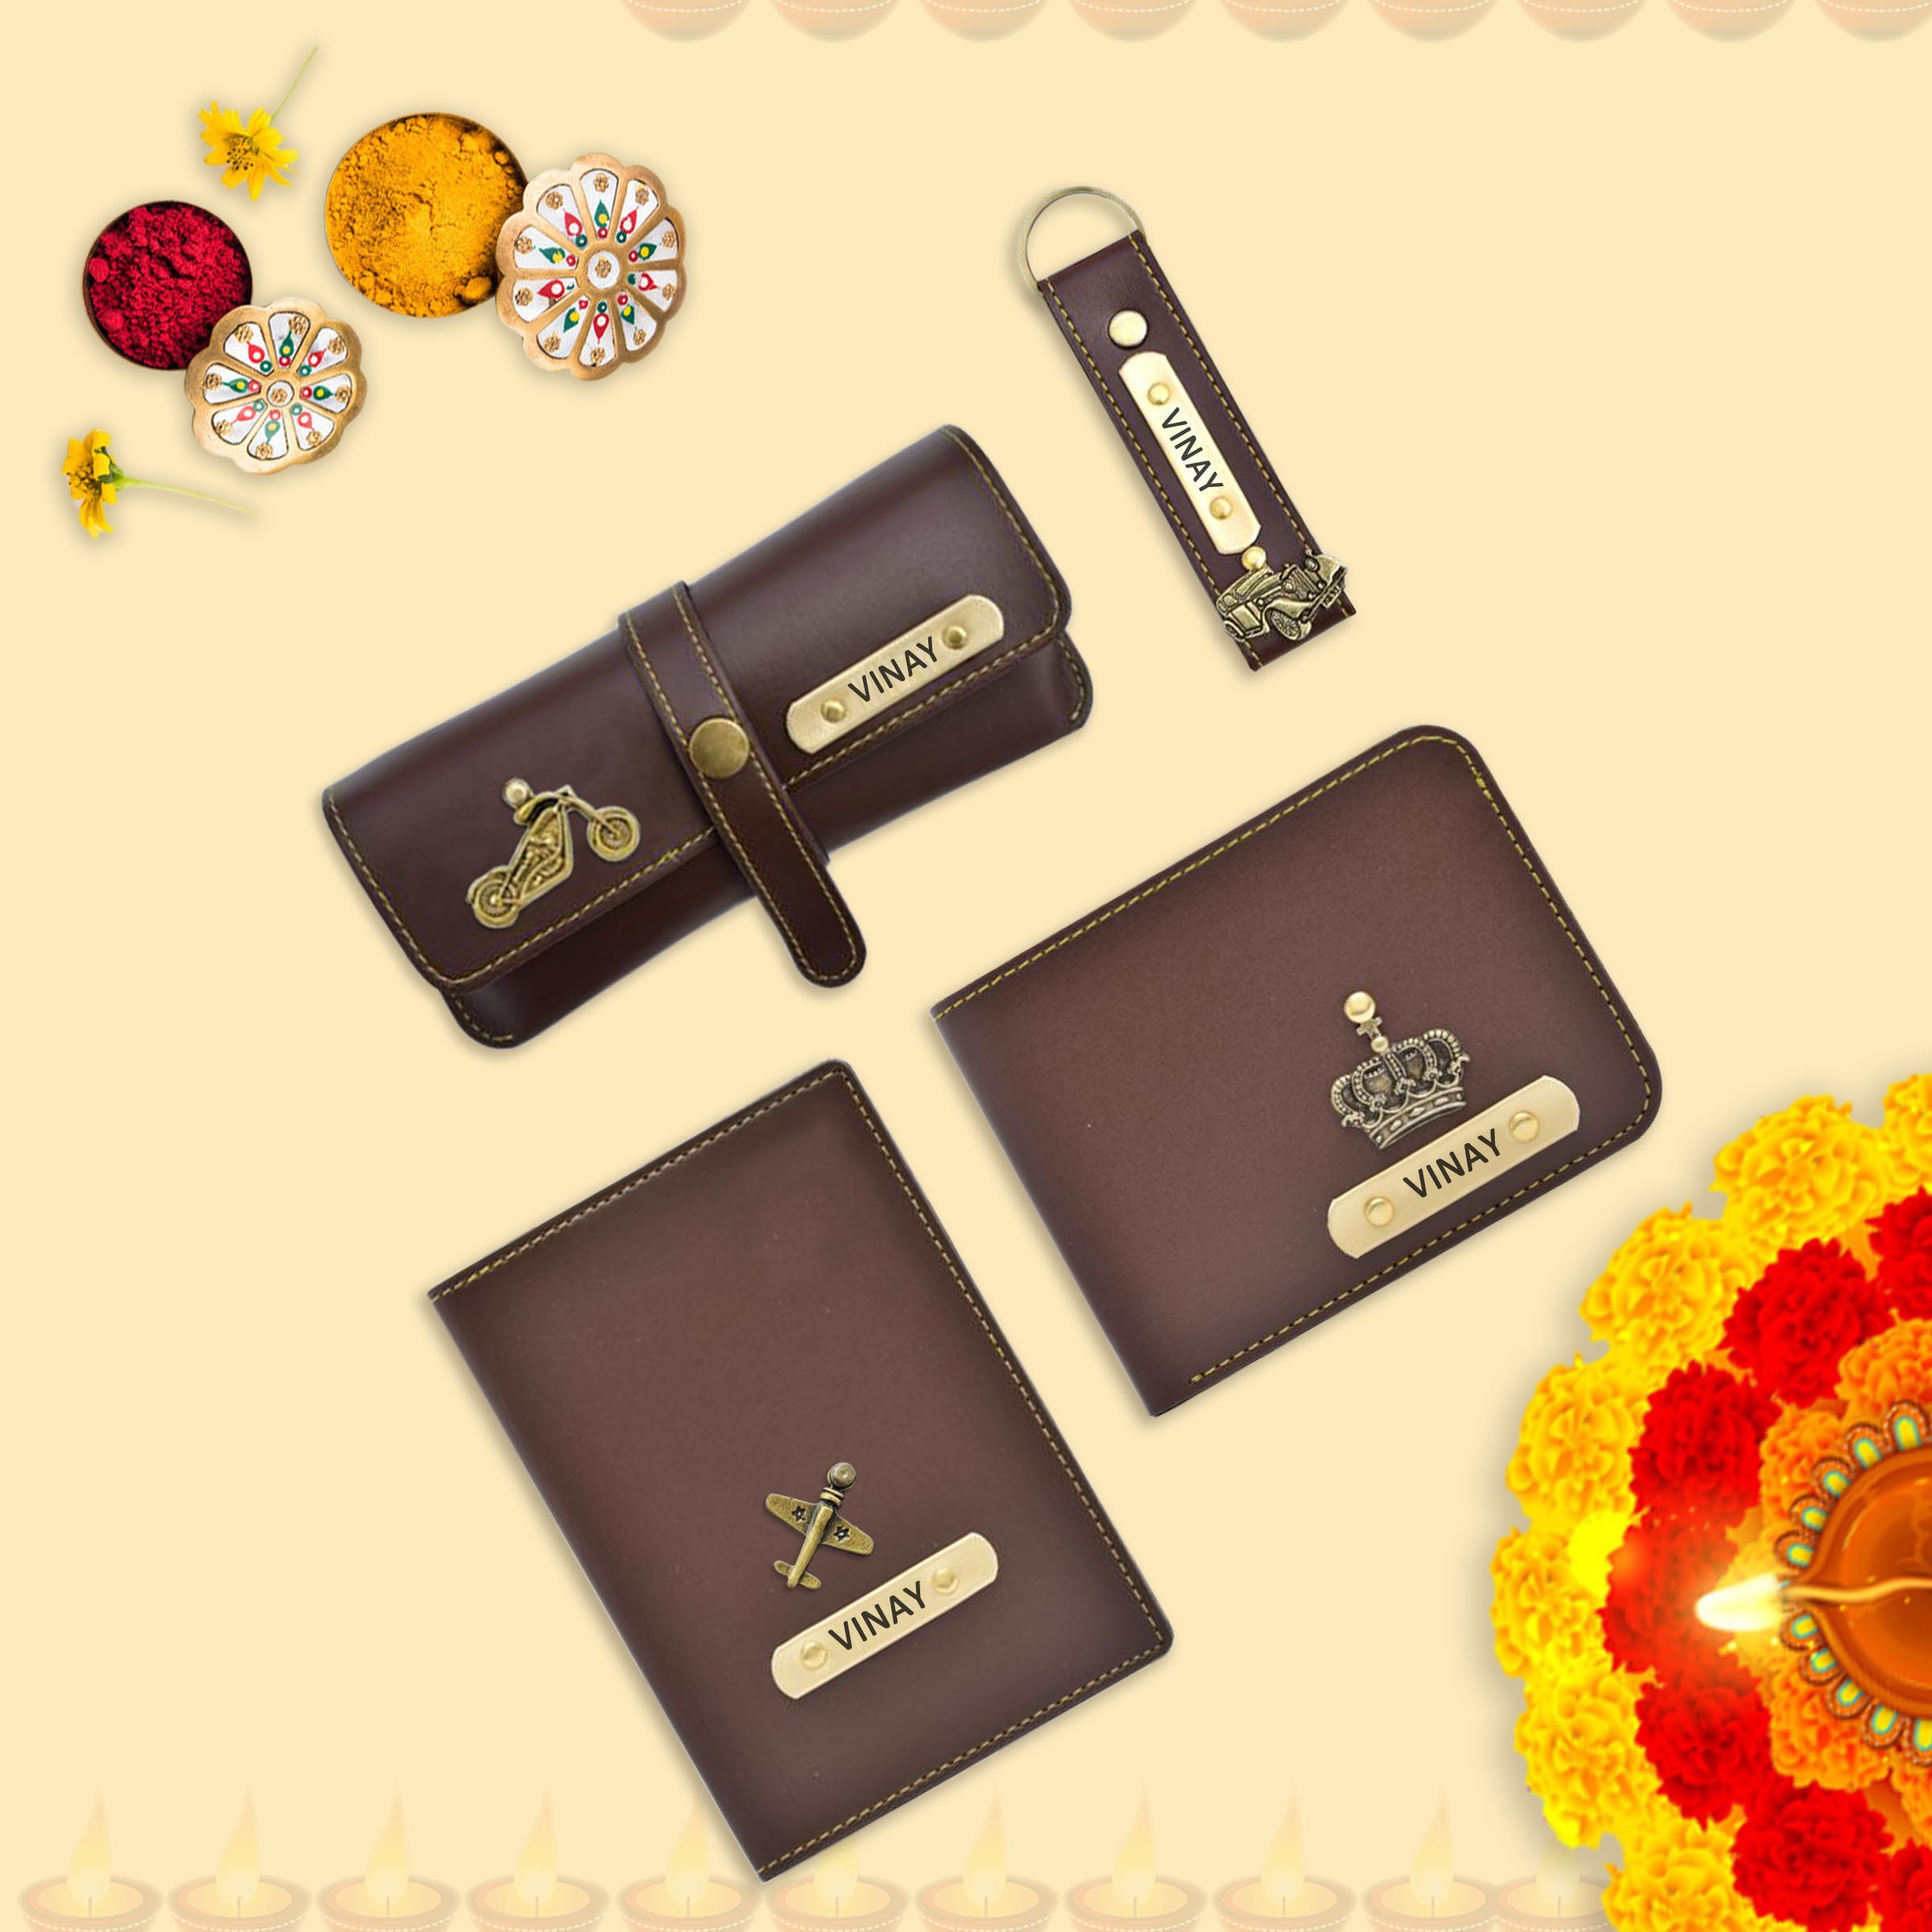 Best Gifts For Husbands During Diwali 2022 दिवाली को बनाएं जगमग अपने पति को  दें ये शानदार गिफ्ट - Best Gifts For Husbands During Diwali 2022: दिवाली को  बनाएं जगमग, अपने पति